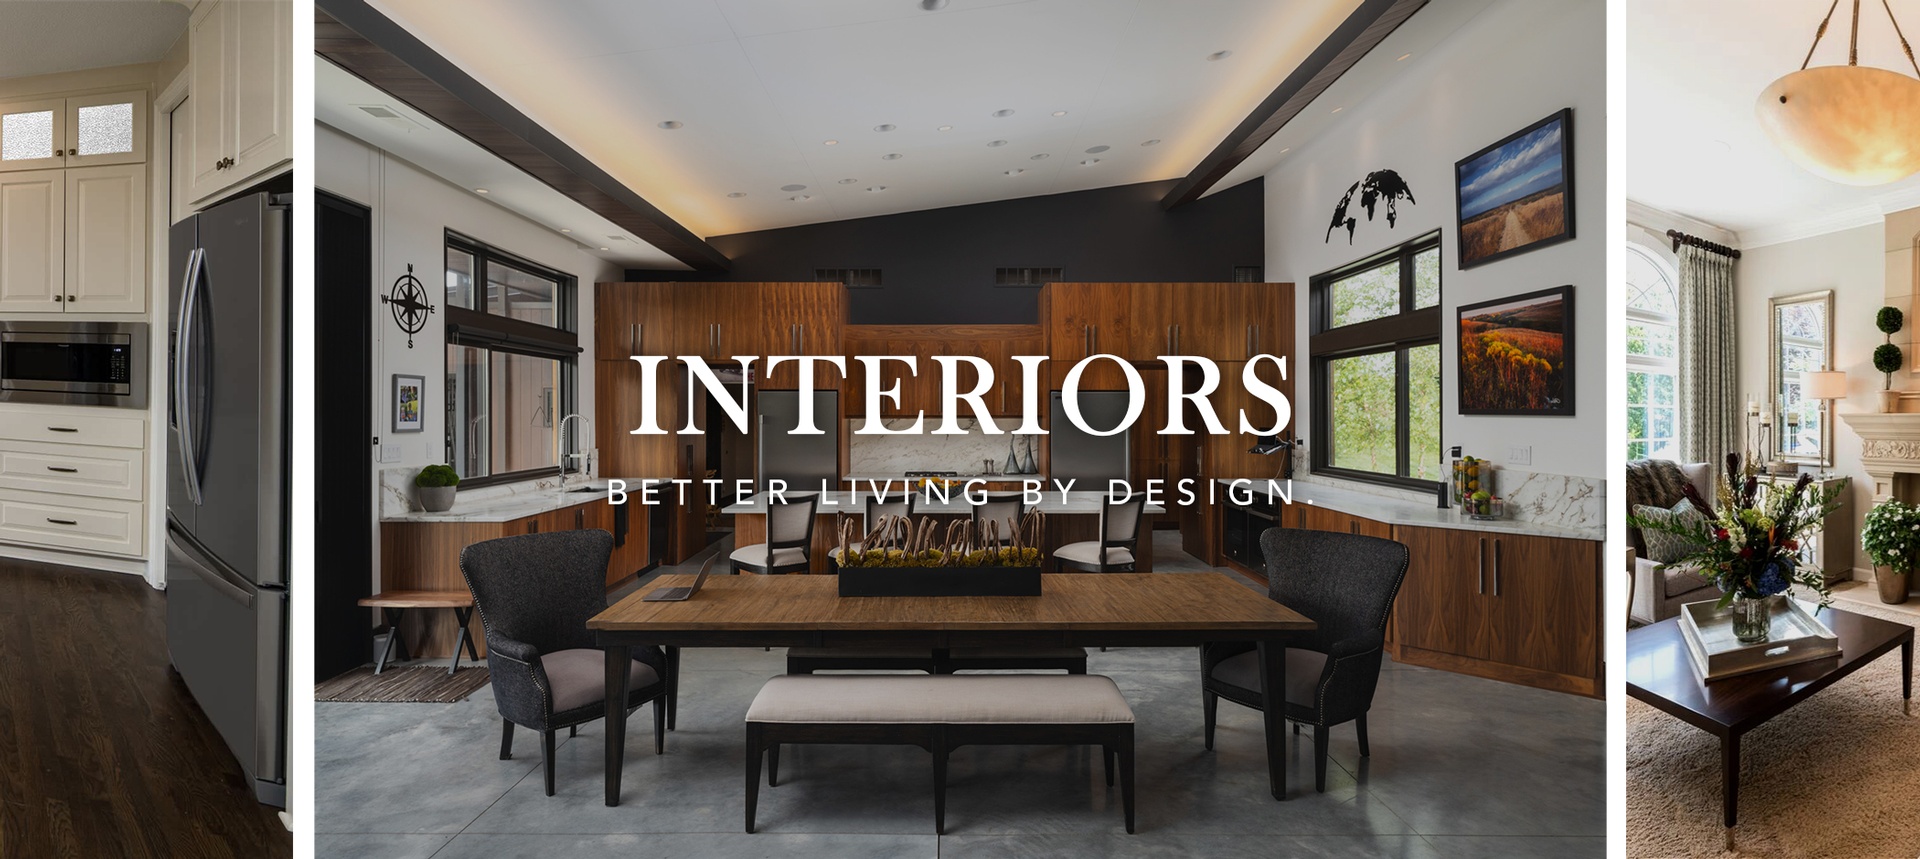 Interior Design Services by Interior Designer Kansas City at R Designs, LLC